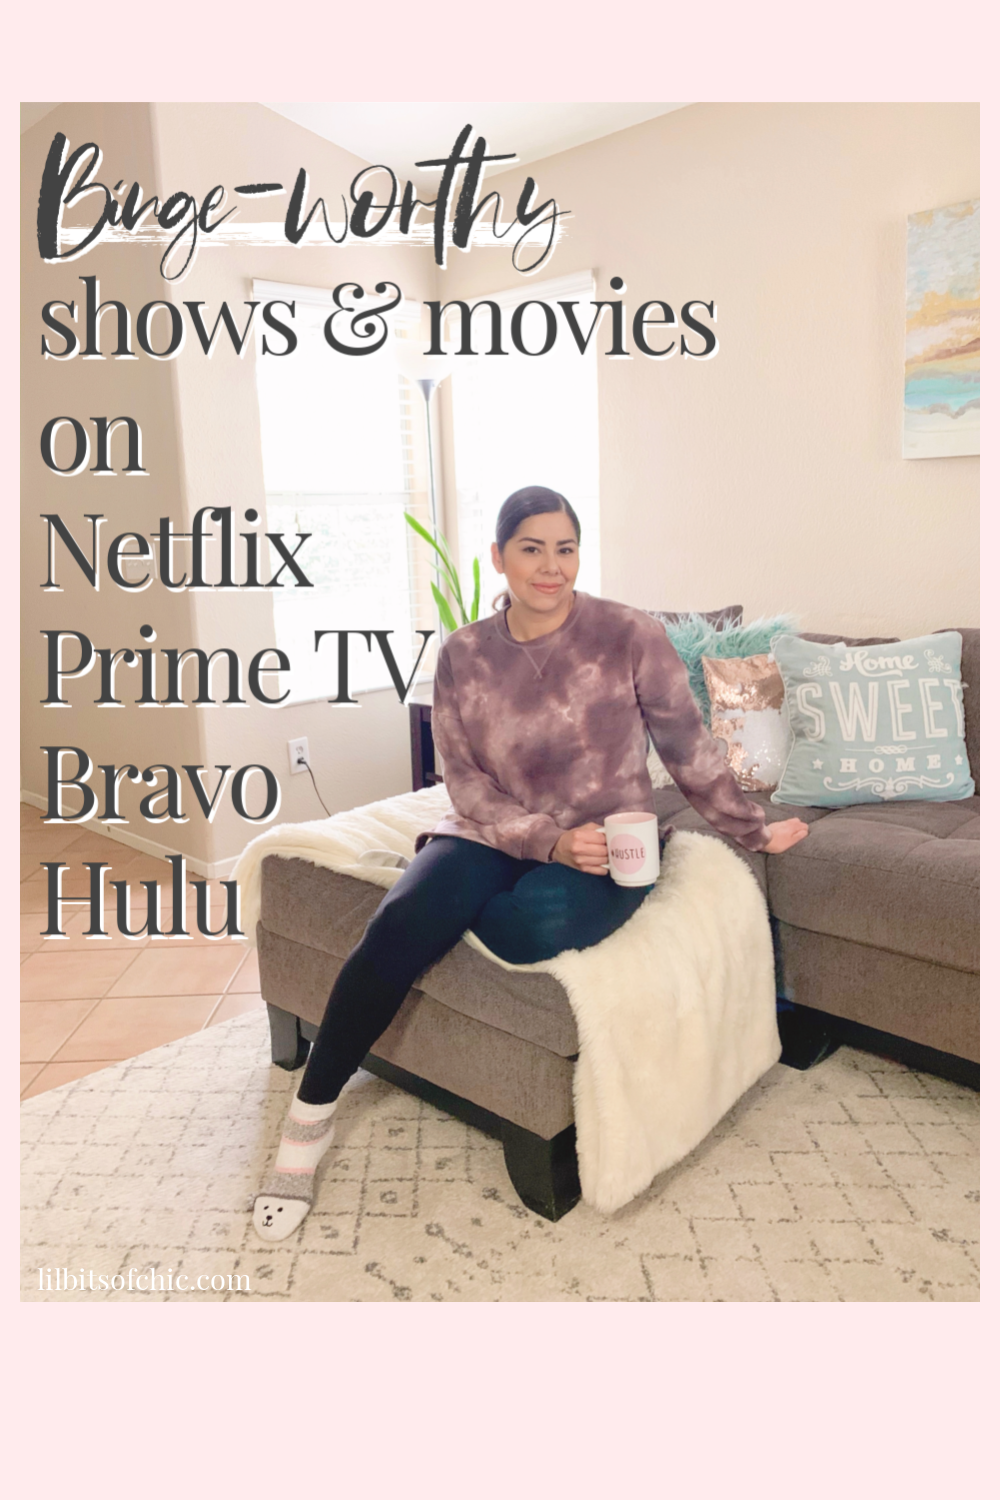 Netflix & Bravo Shows to binge during Social Distancing, Binge-worthy Prime TV shows